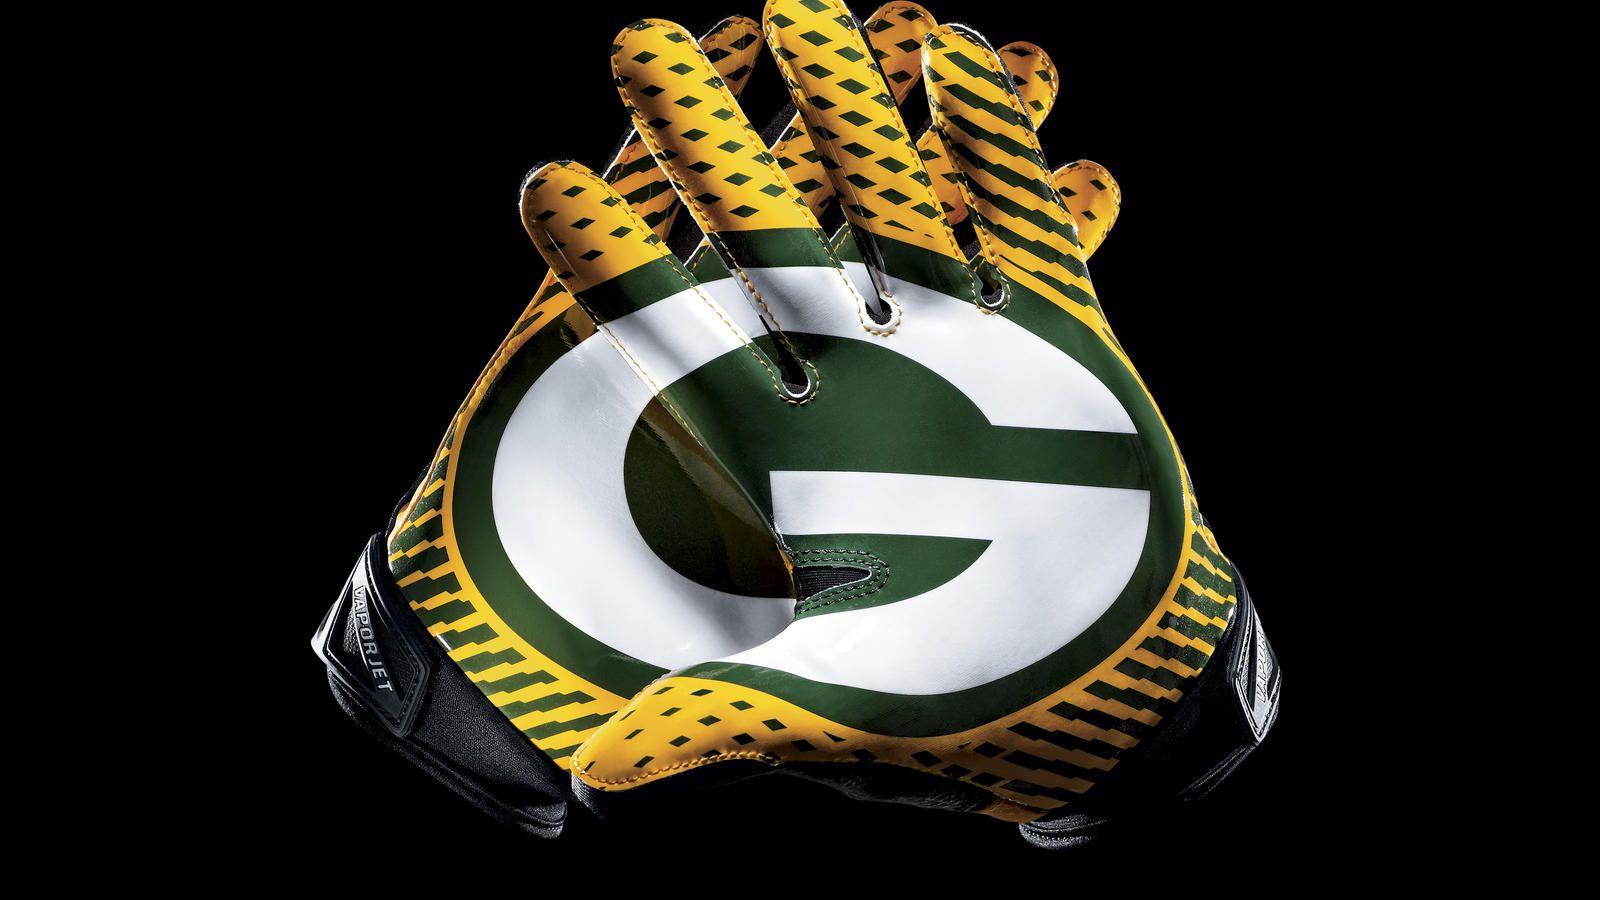 NFL Packers Logo - Green Bay Packers 2012 Nike Football Uniform - Nike News